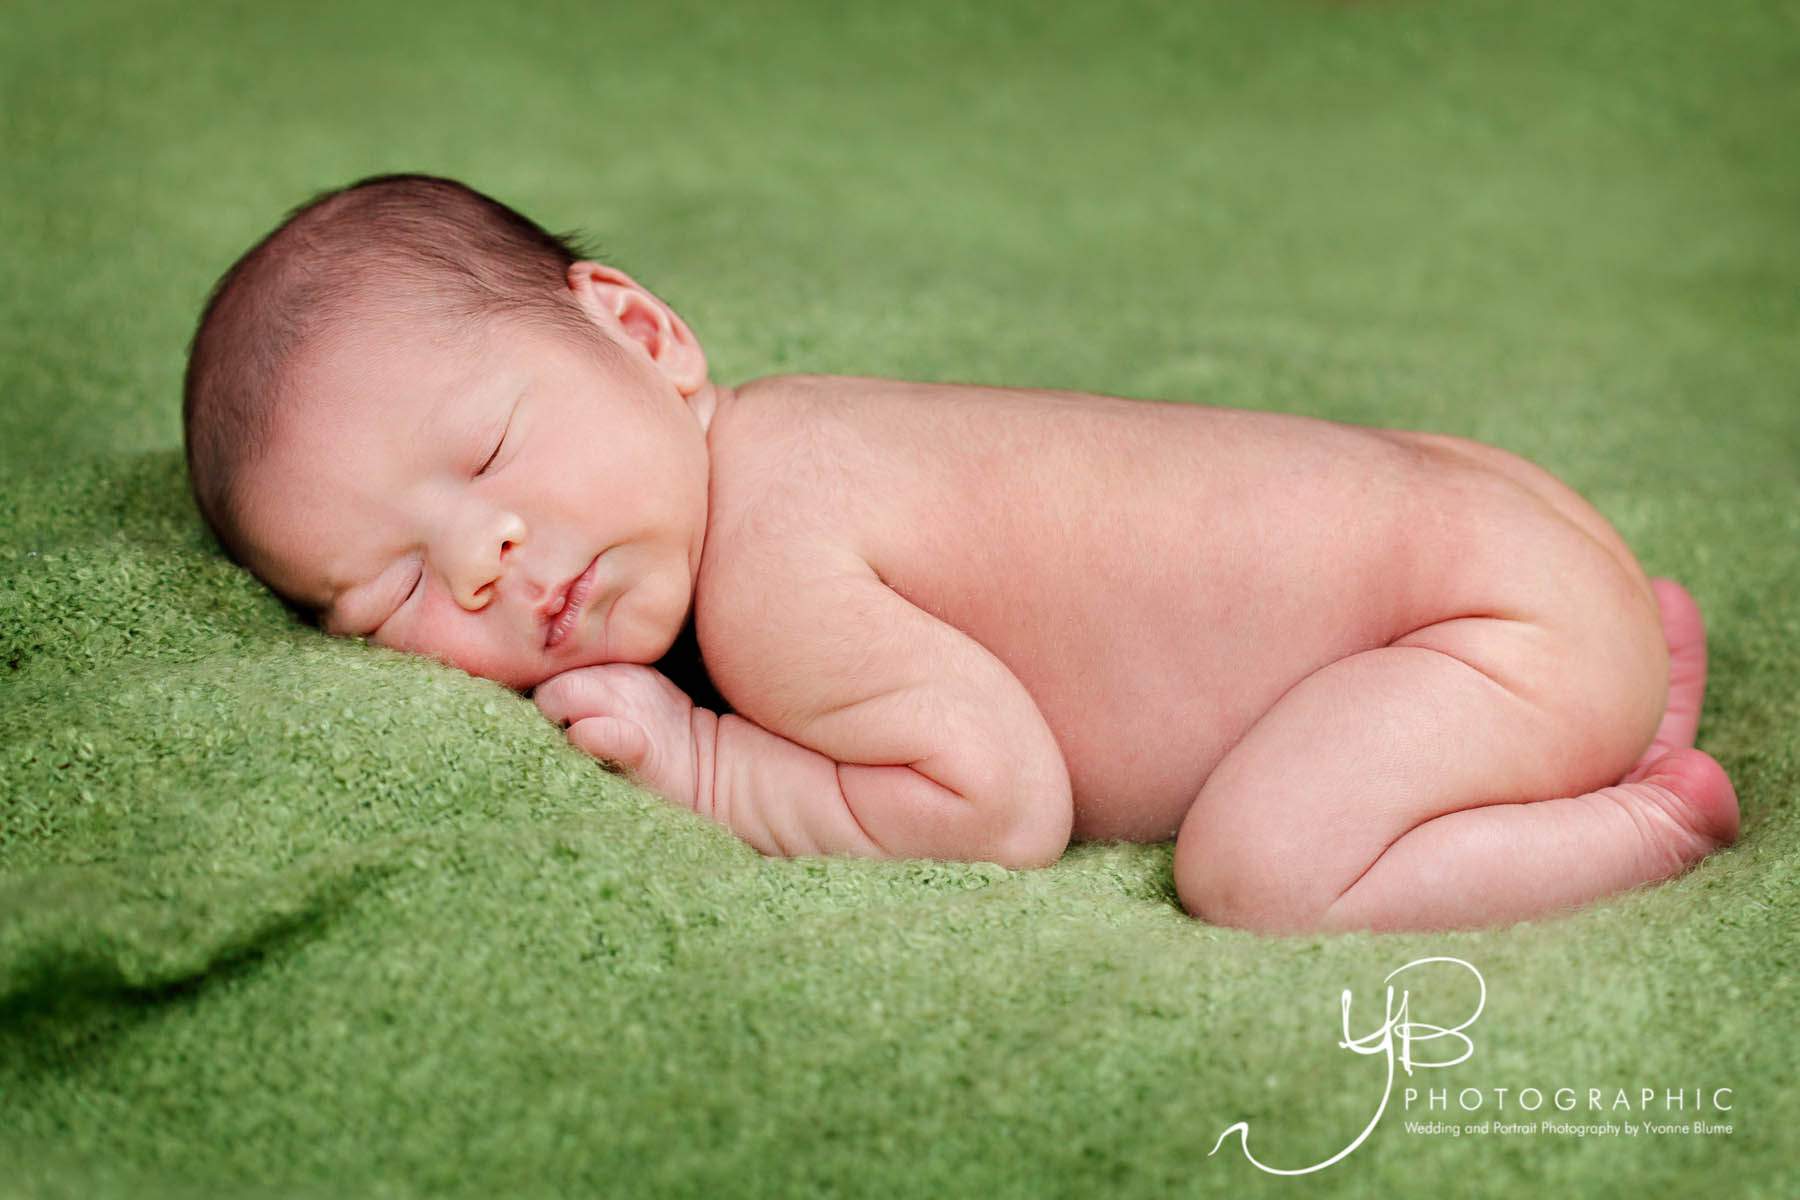 Newborn Baby Photos by YBPHOTOGRAPHIC